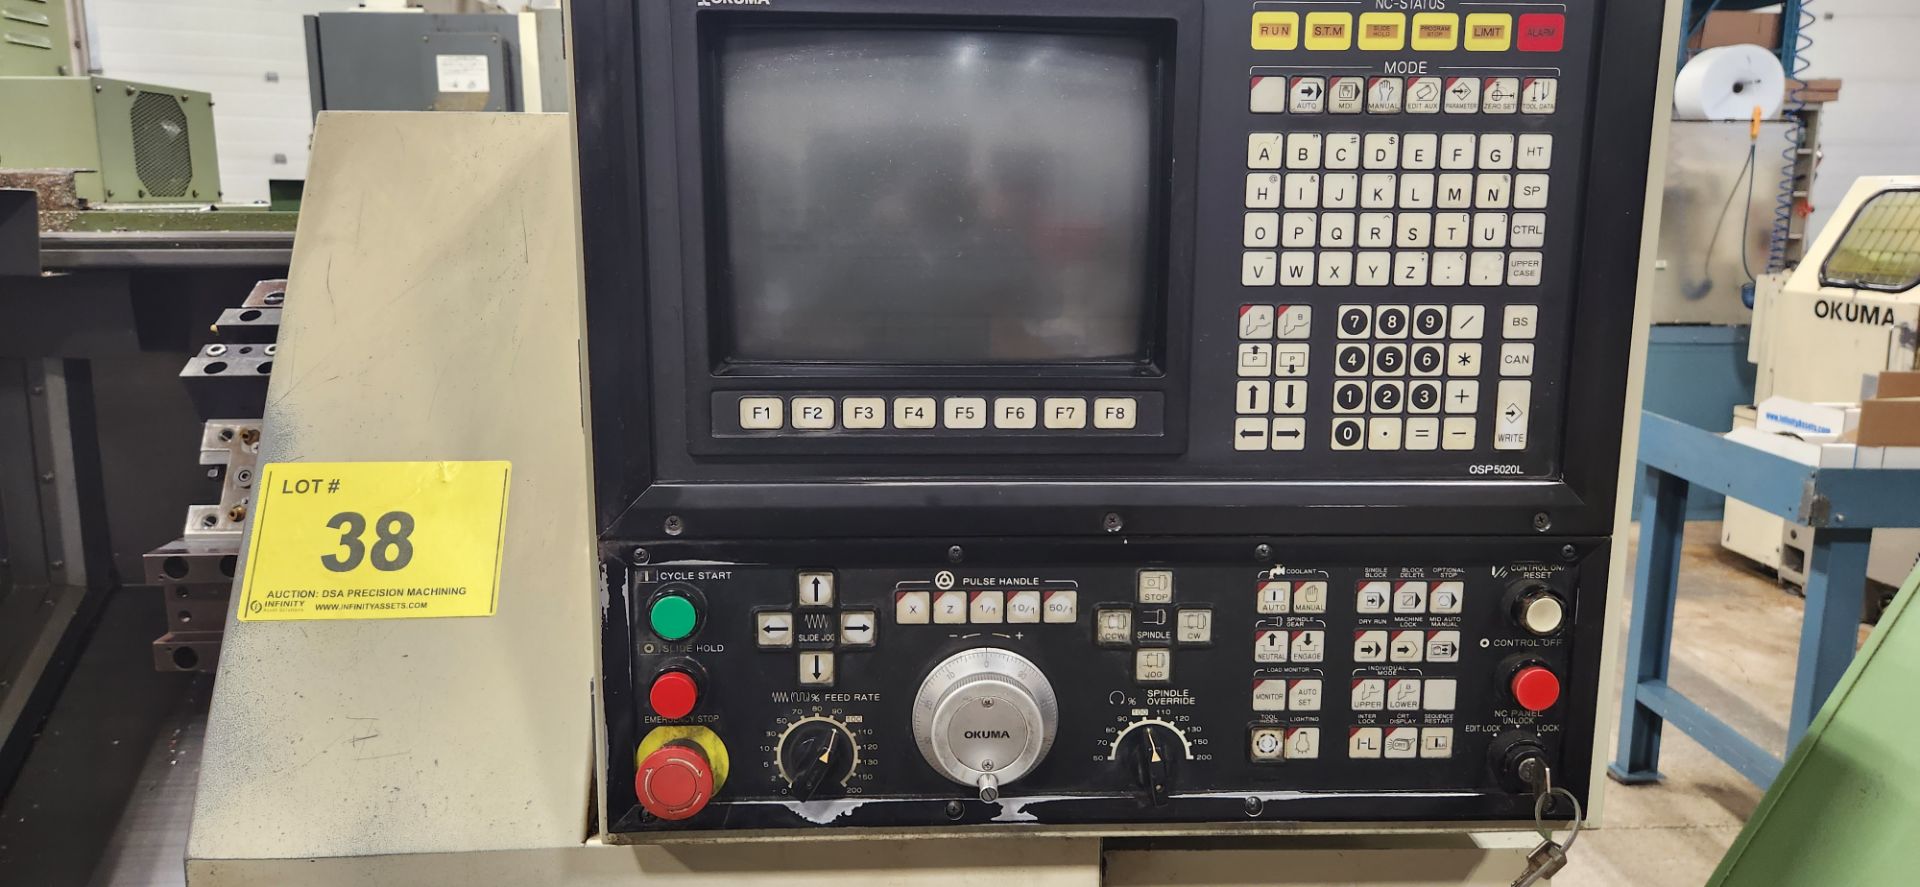 OKUMA CADET LNC8 CNC TURNING CENTER, CNC CONTROL, 10” 3-JAW CHUCK, TAILSTOCK, 12-STATION TURRET, 9. - Image 13 of 14